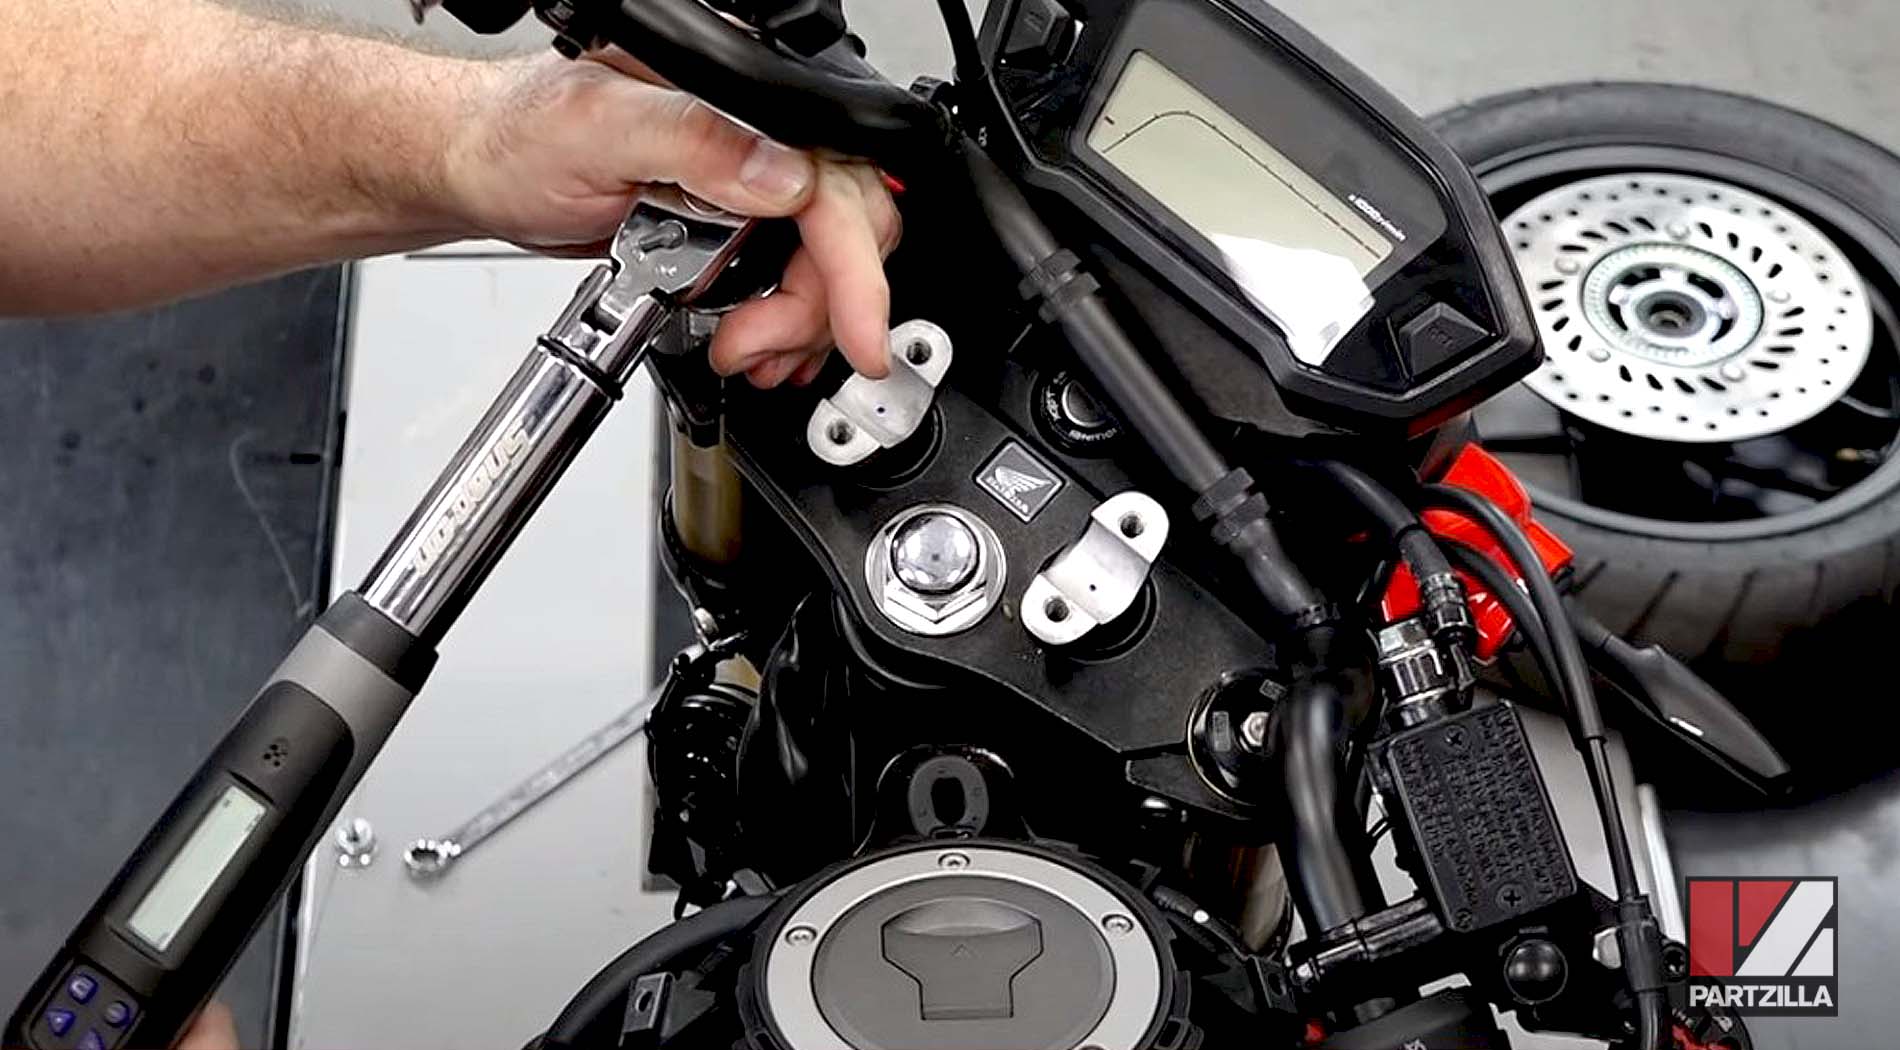 Honda Grom ABS motorcycle aftermarket fork kit upgrade